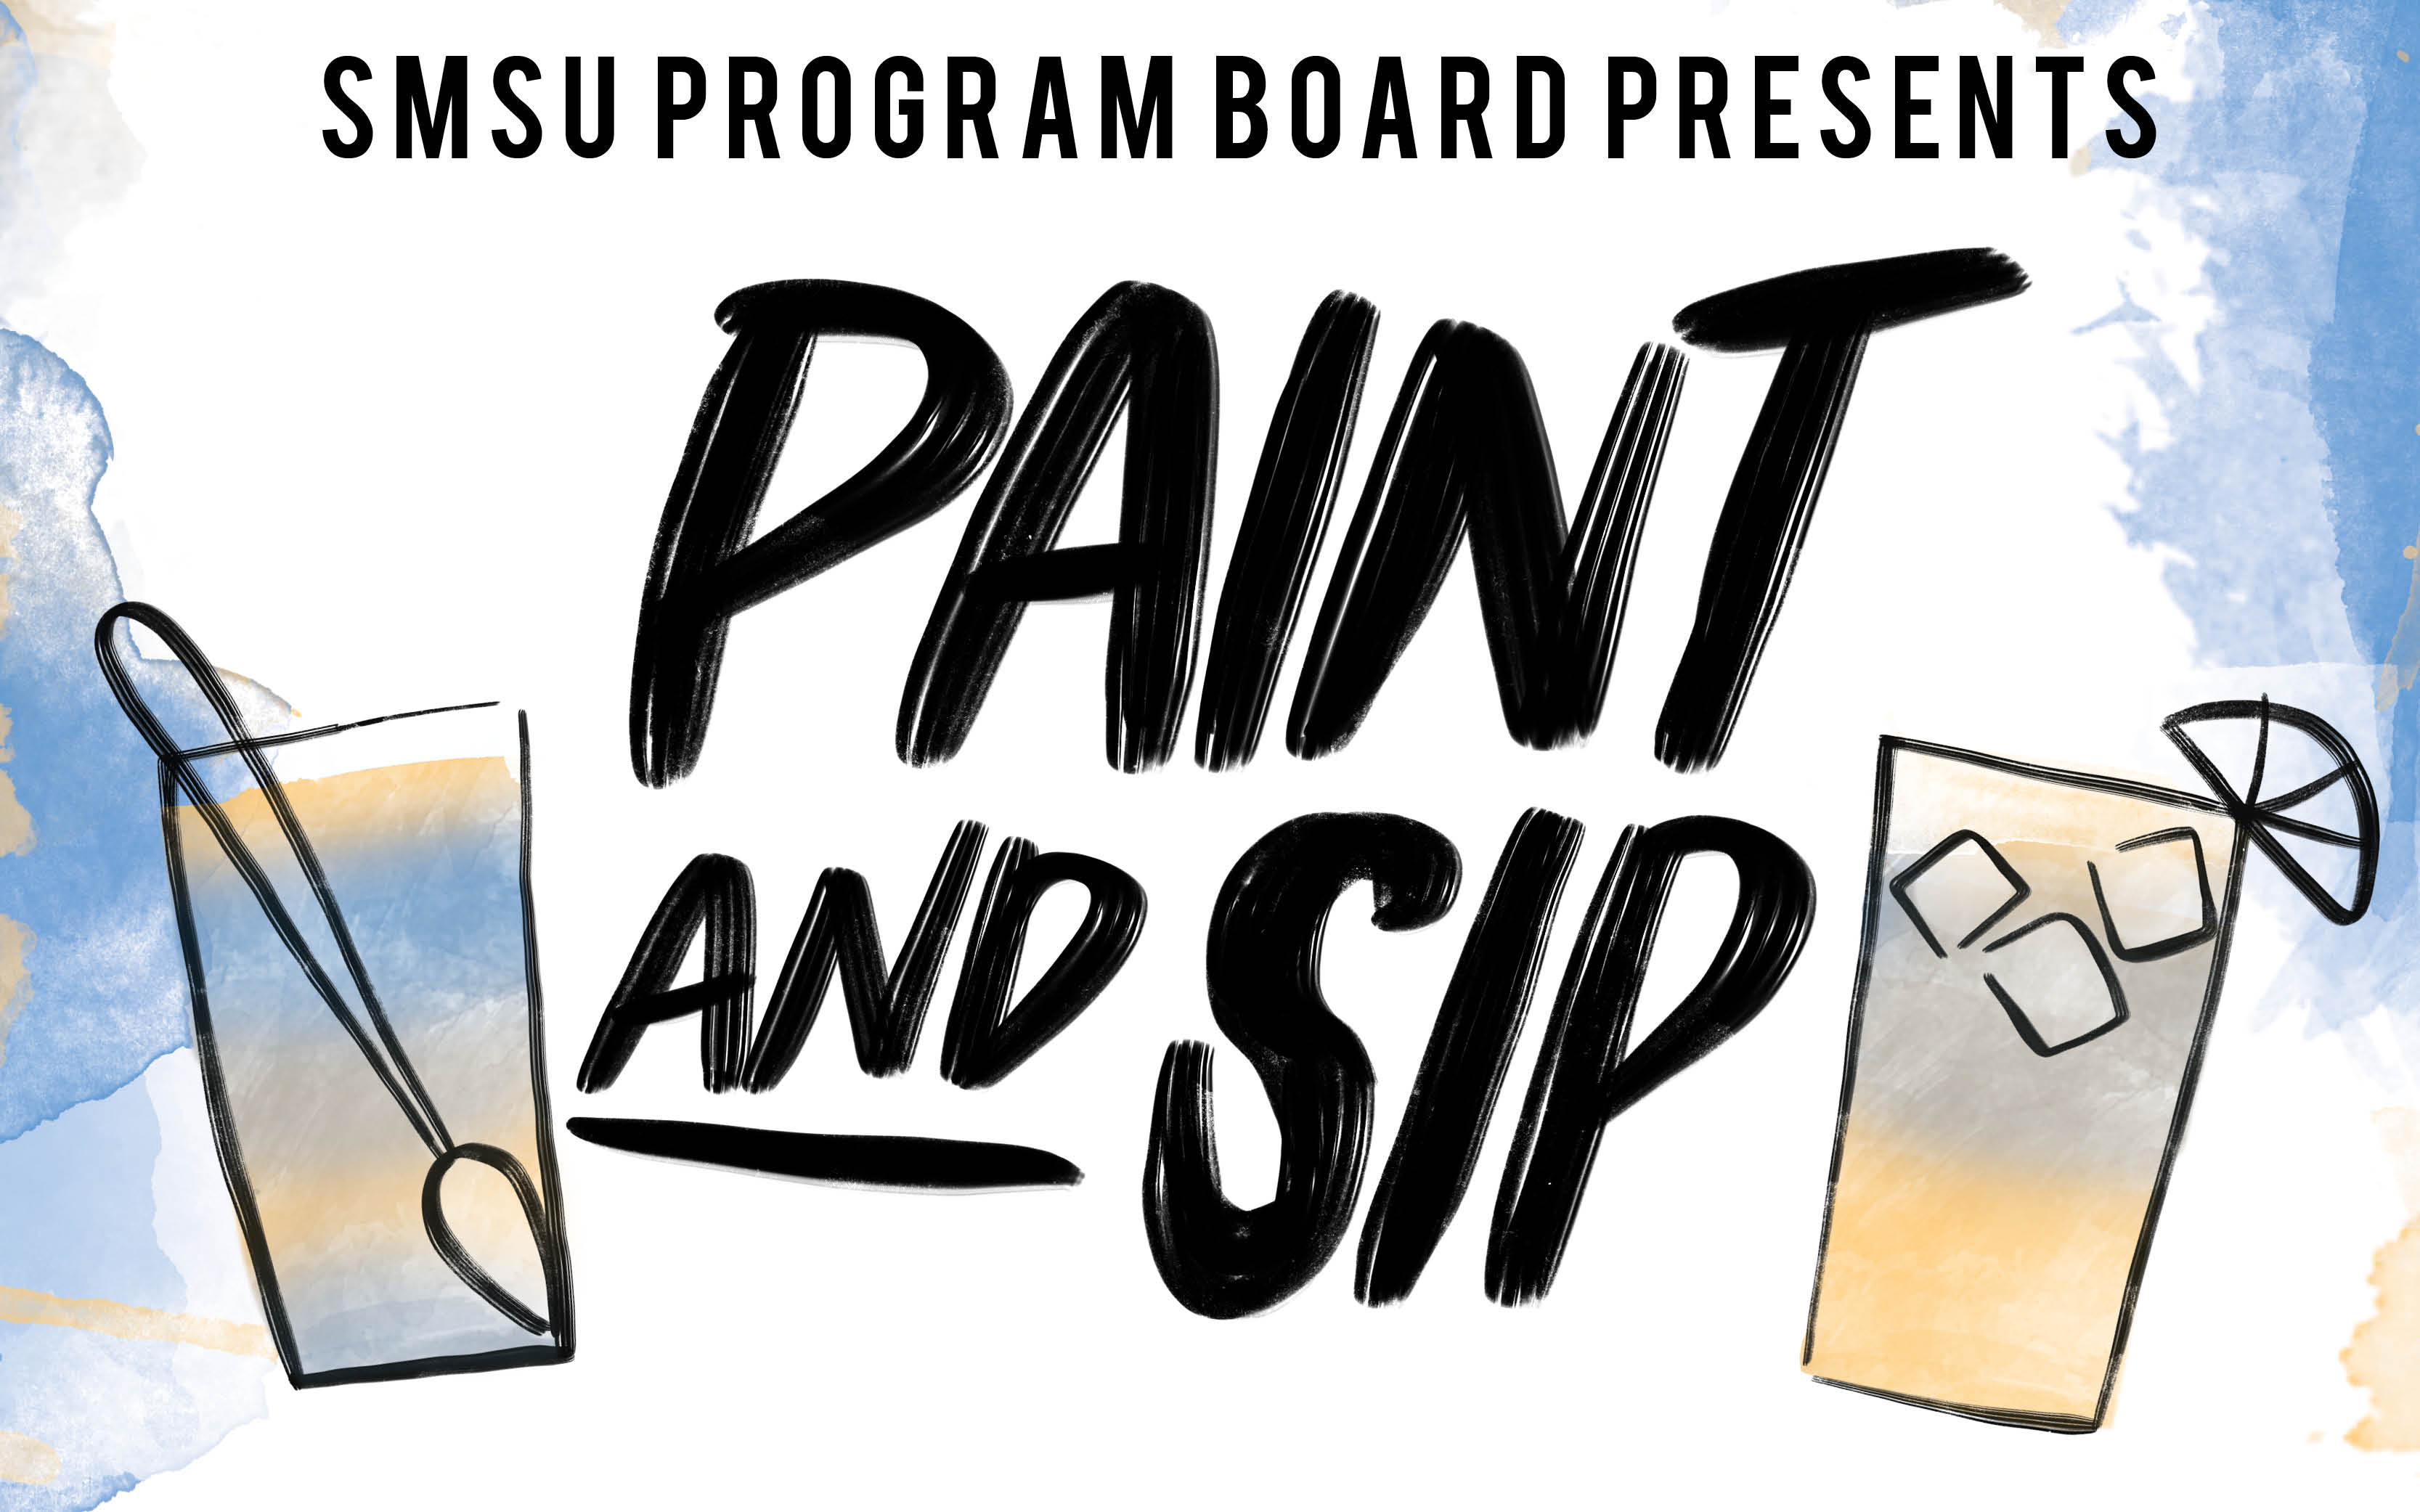 SMSU Program Board presents "Paint and Sip"